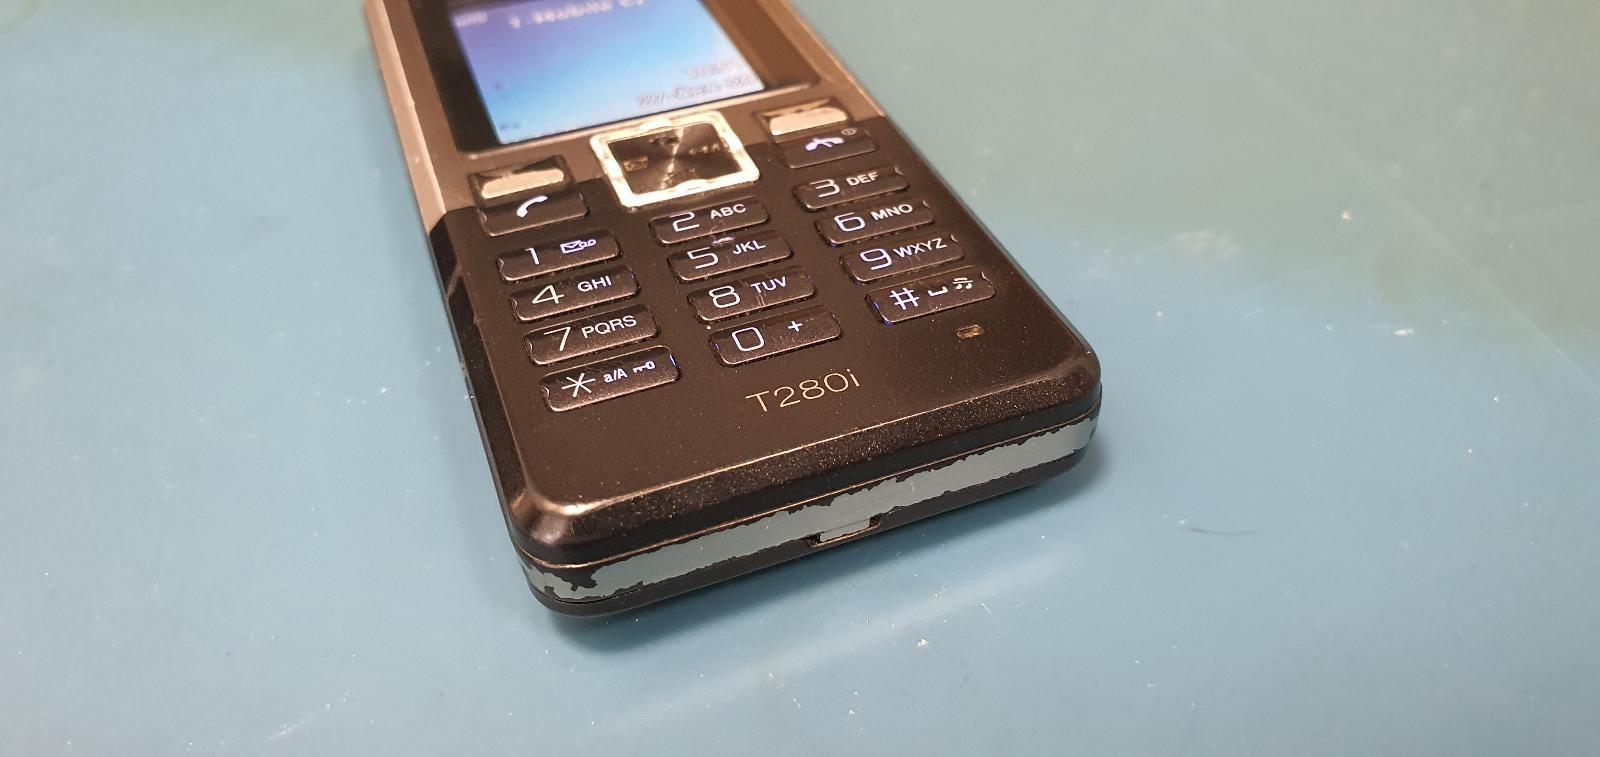 Tlačítkový Mobilní telefon Sony Ericsson T280i  RARITA  - Mobily a chytrá elektronika